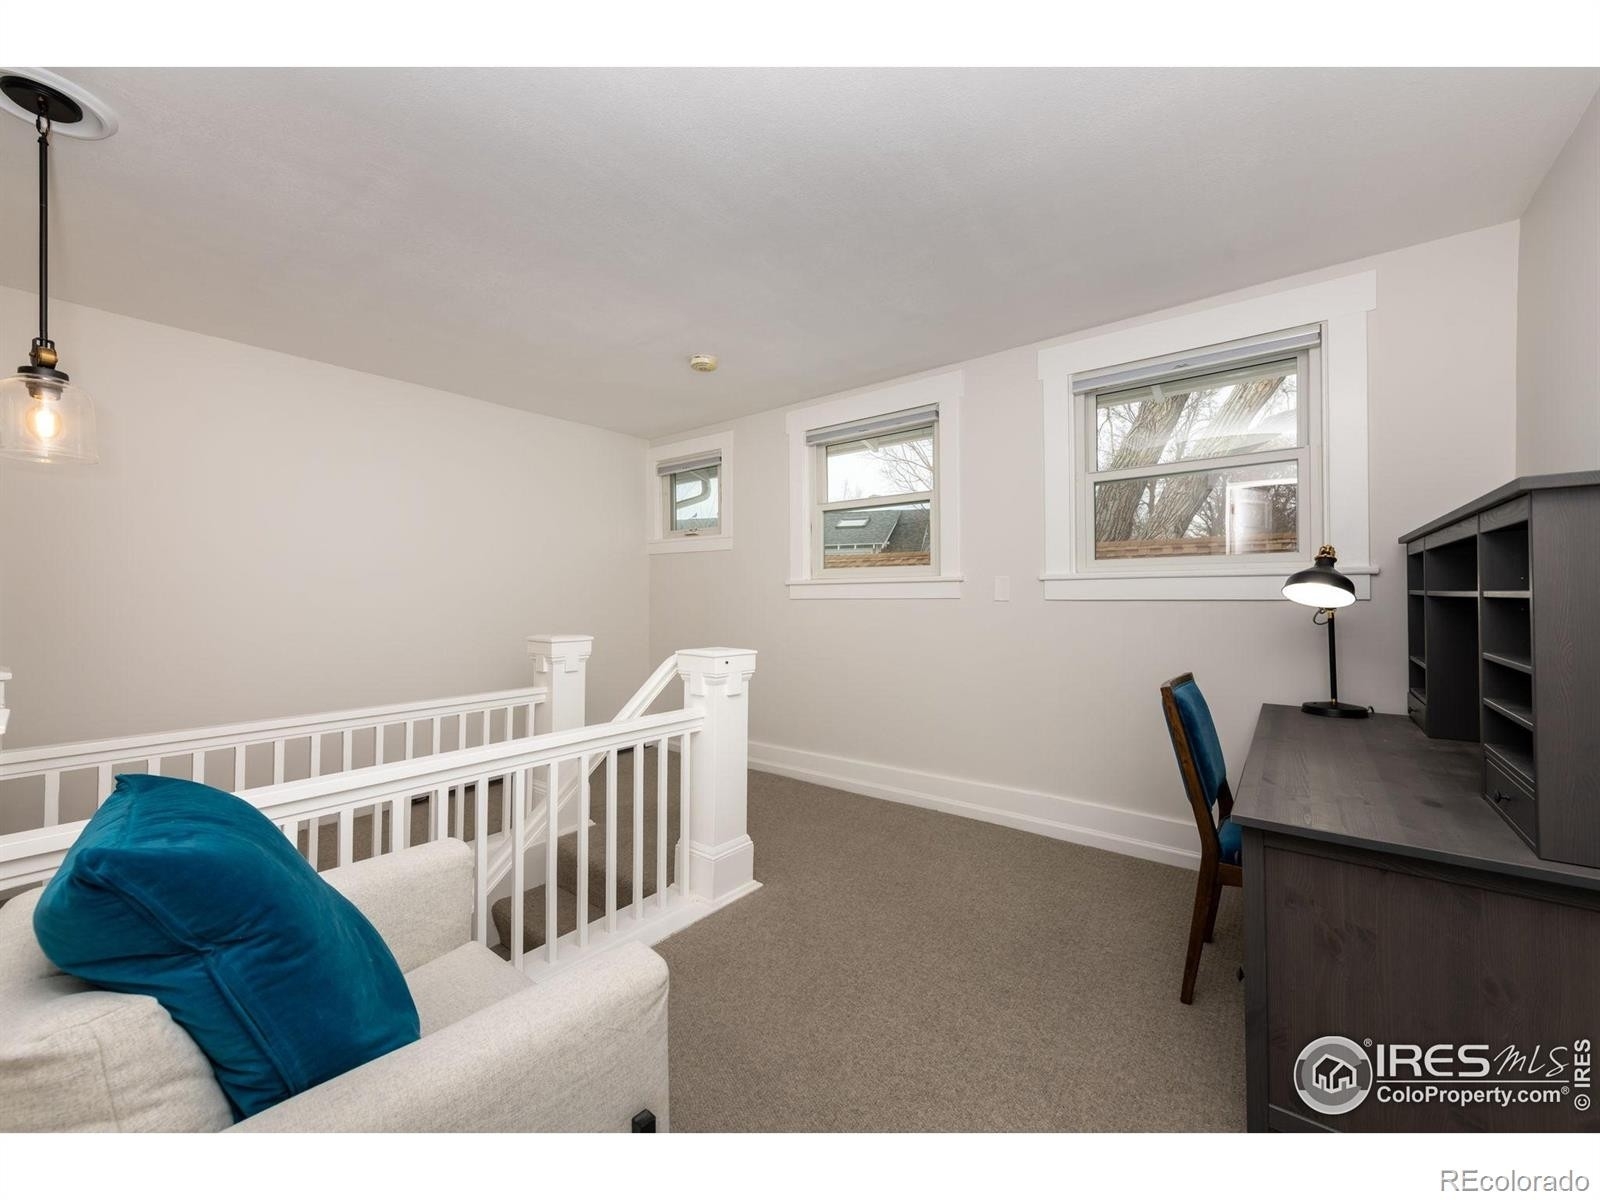 19. Single Family Homes for Sale at Catalpa Park, Boulder, Colorado 80304